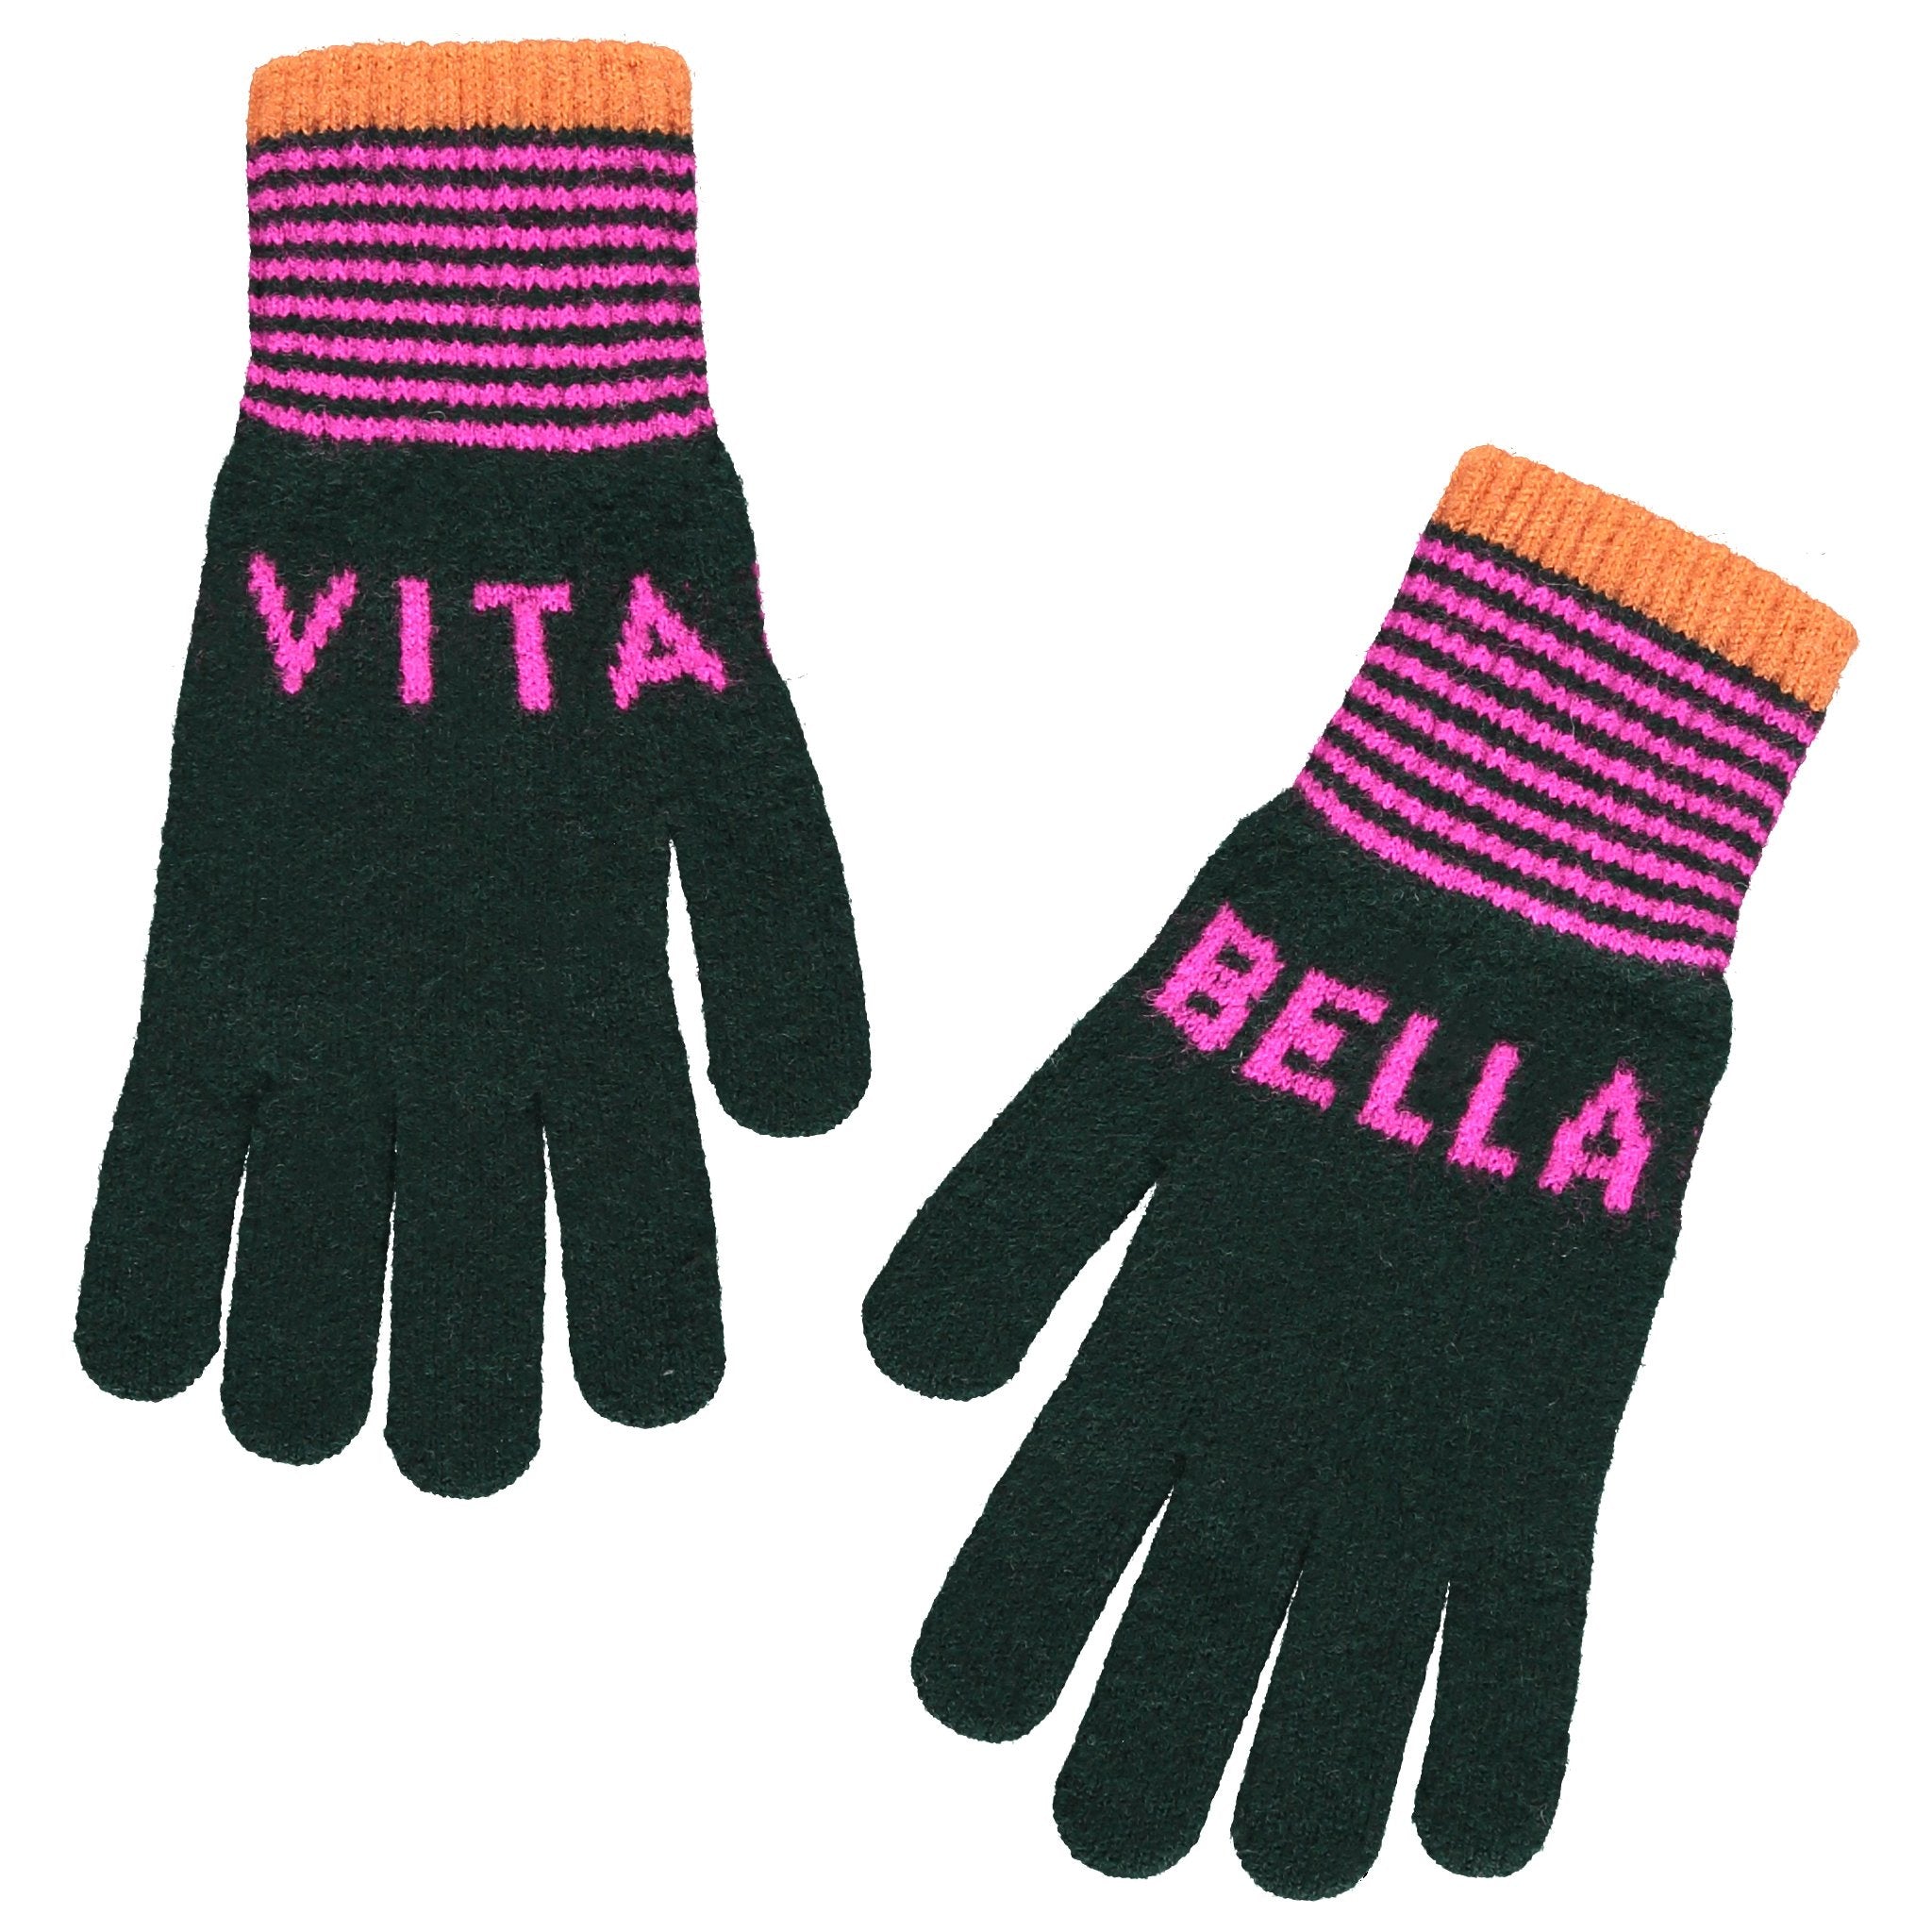 Quinton & Chadwick - VITA BELLA Gloves in Dark Green and Fuchsia - HAYGEN